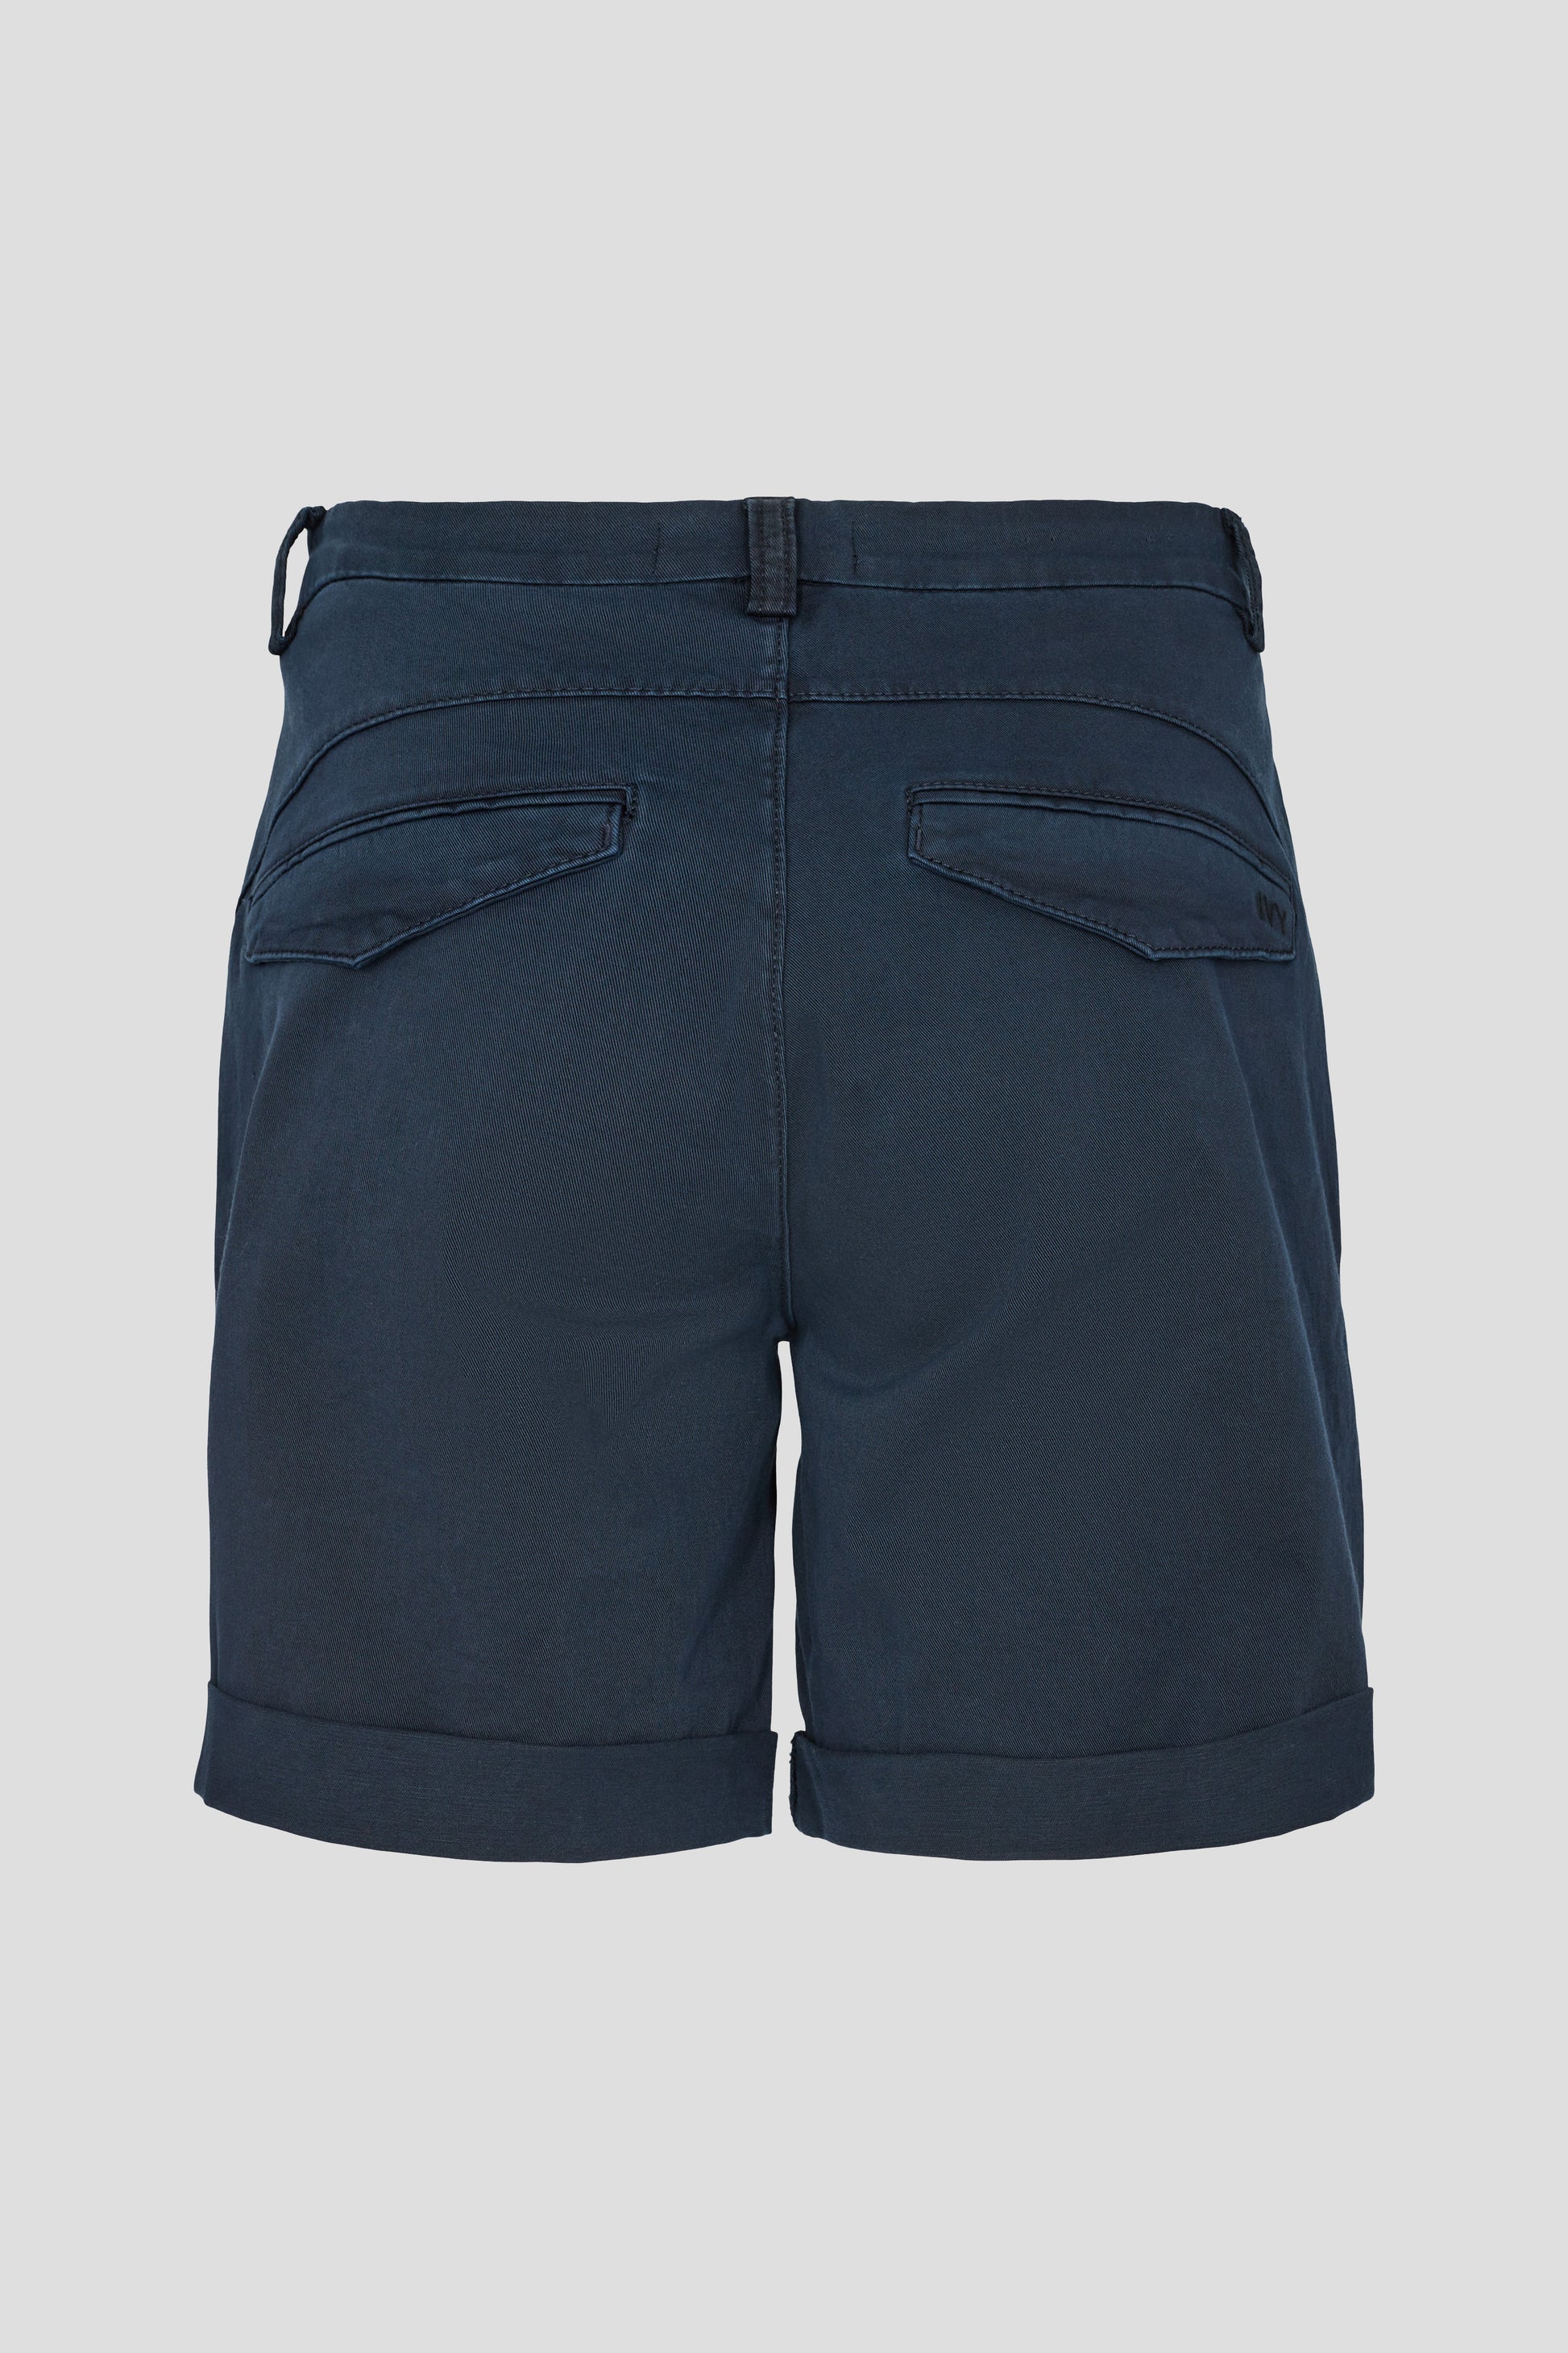 IVY Copenhagen IVY-Karmey Chino Shorts Jeans & Pants 52 Navy